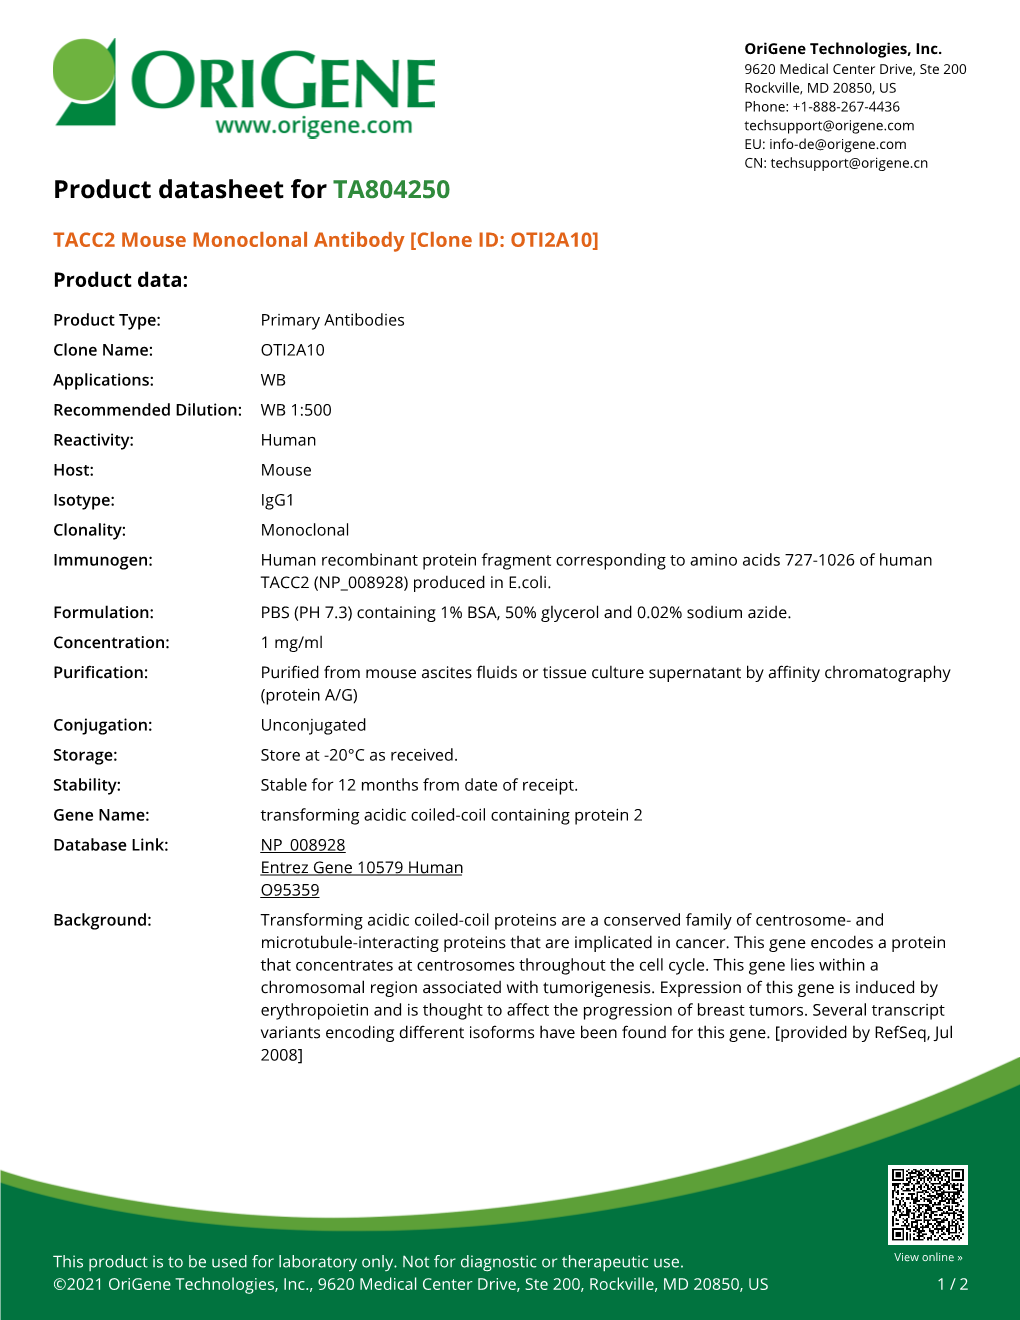 TACC2 Mouse Monoclonal Antibody [Clone ID: OTI2A10] Product Data